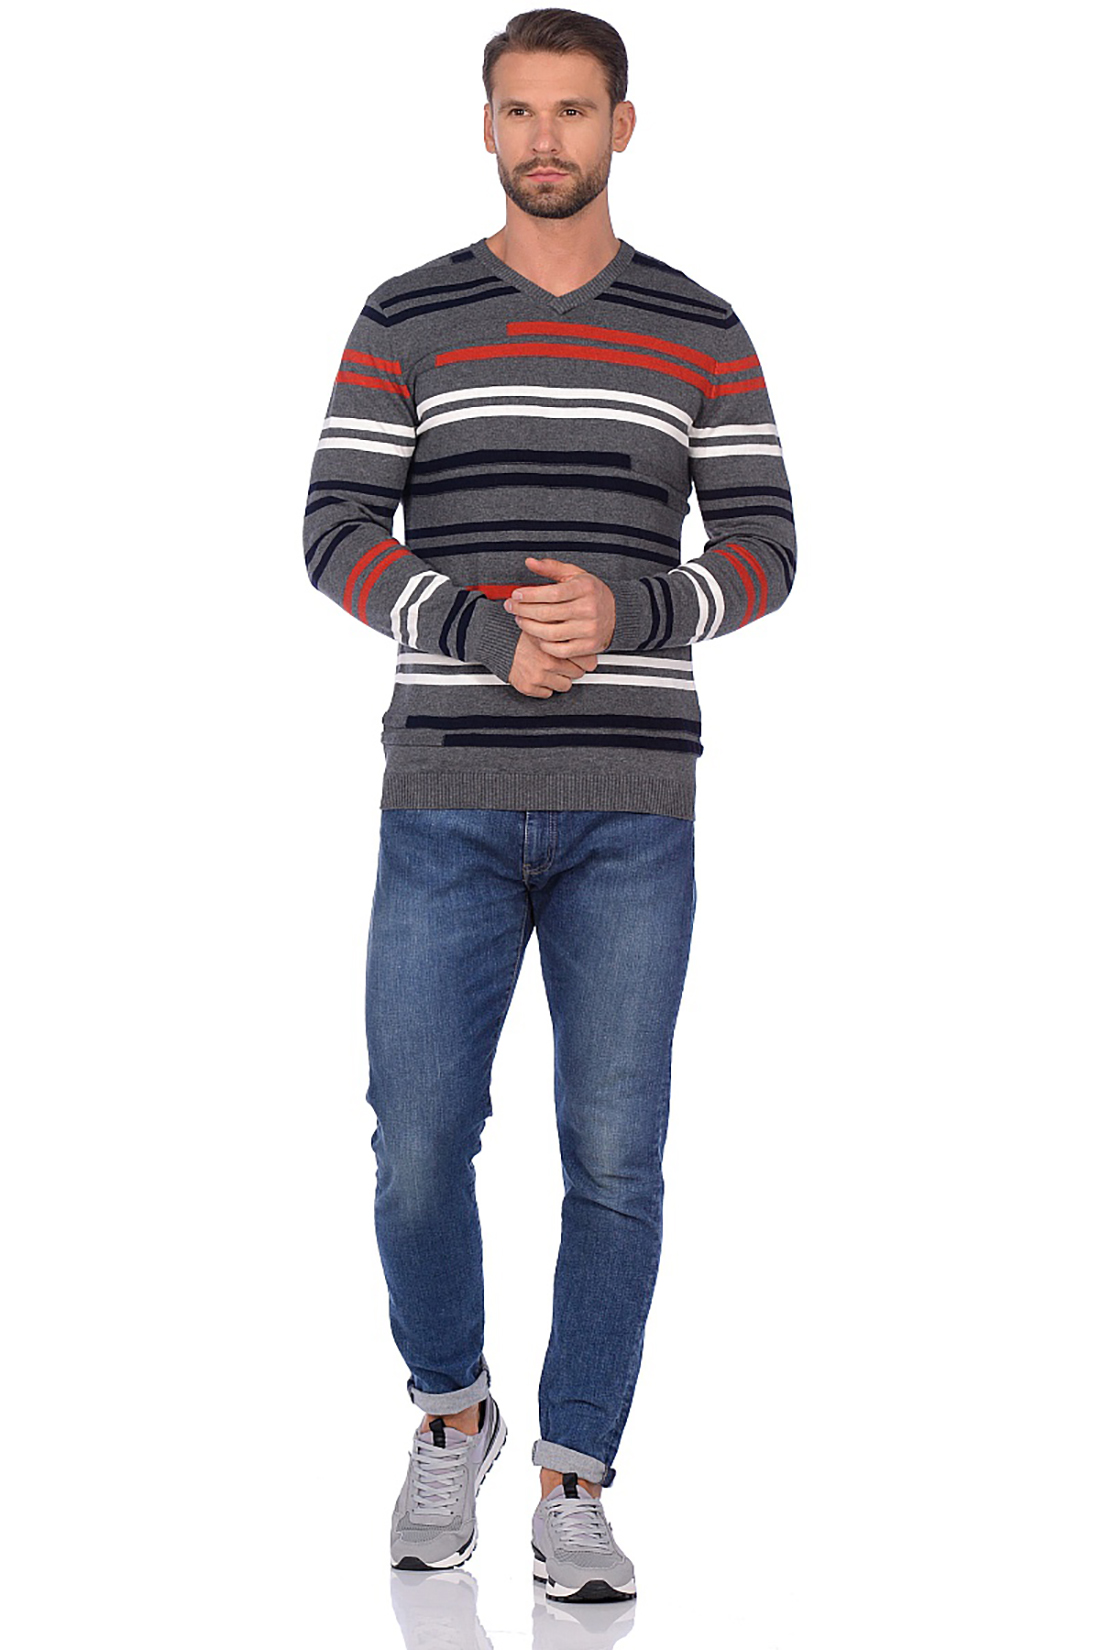 Пуловер с контрастными полосками (арт. baon B639530), размер XXL, цвет серый Пуловер с контрастными полосками (арт. baon B639530) - фото 3